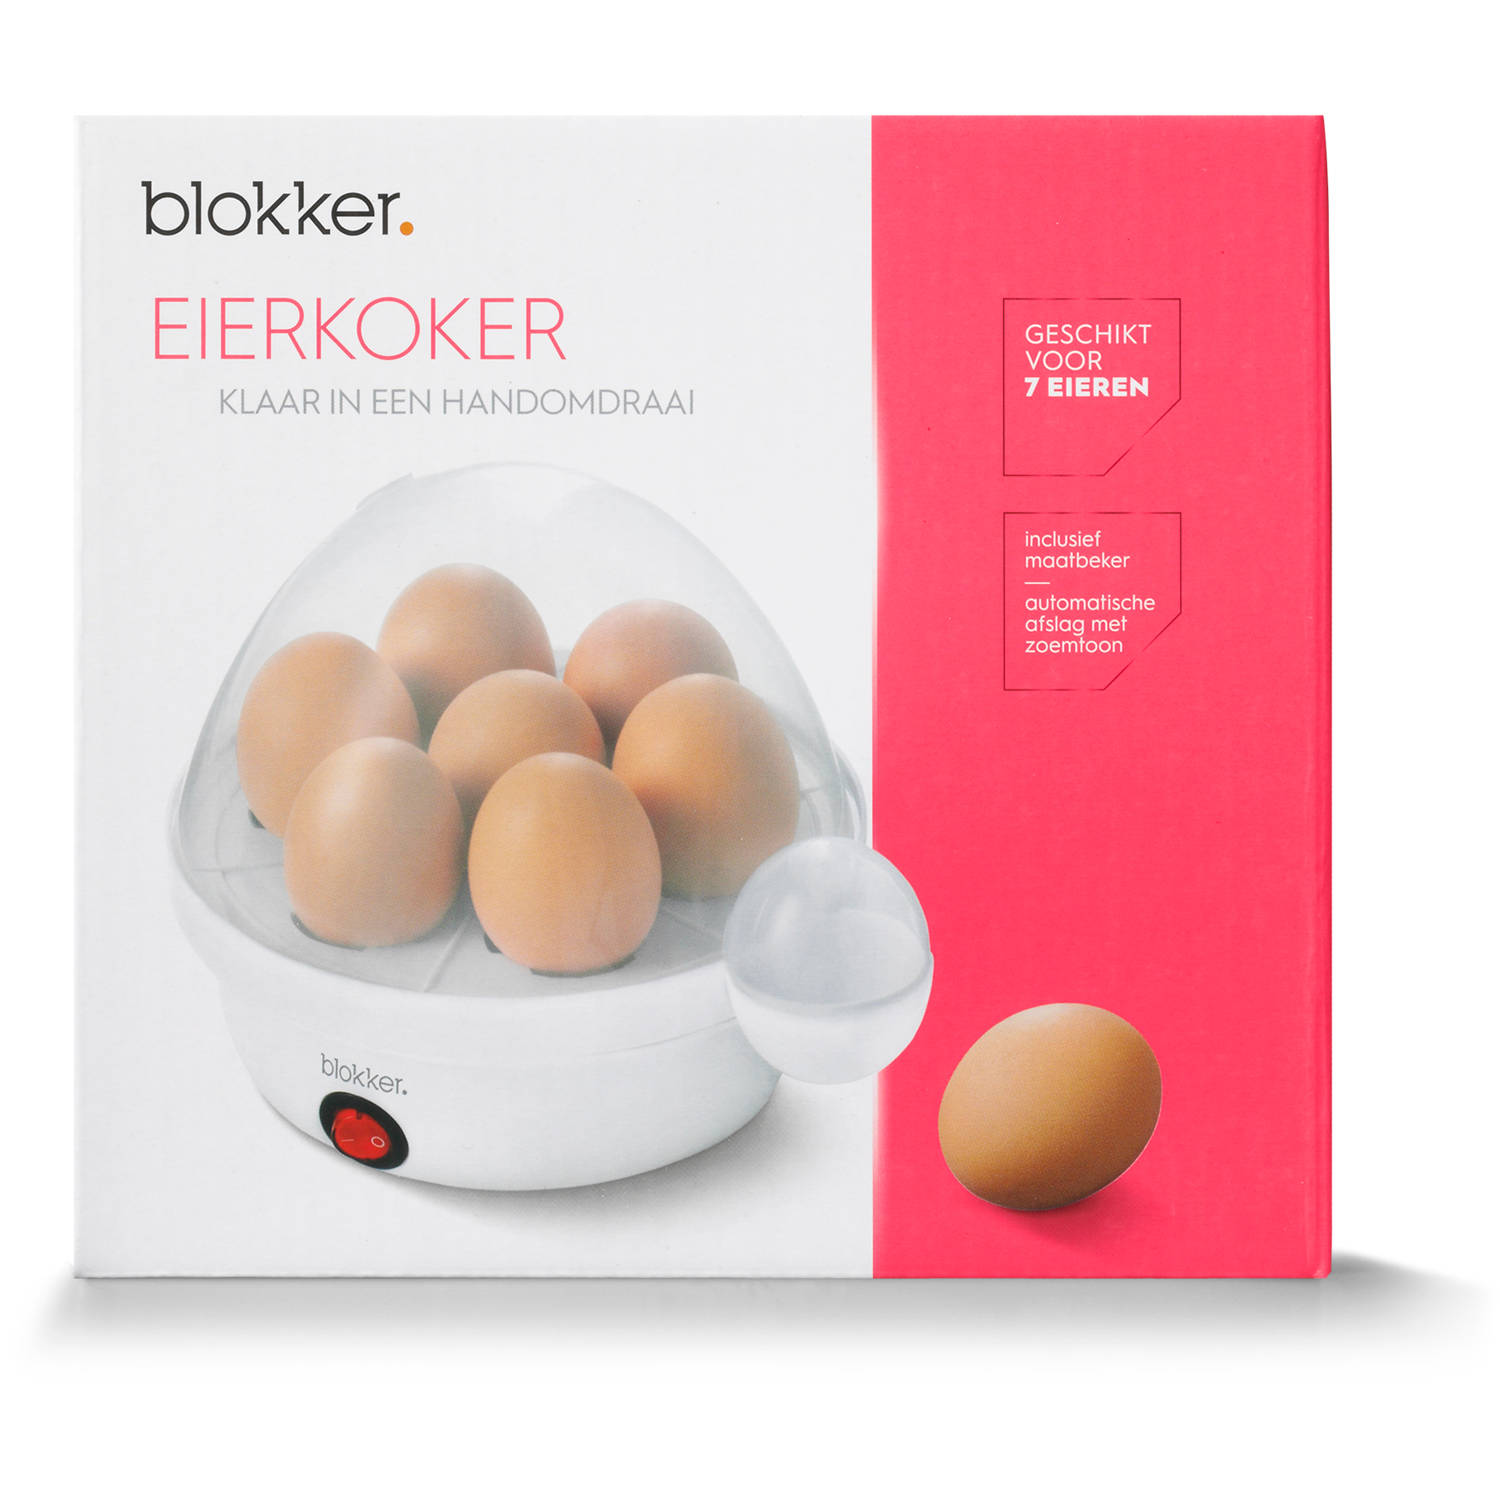 Bisschop Kinderachtig Induceren Blokker eierkoker BL-70001 | Blokker